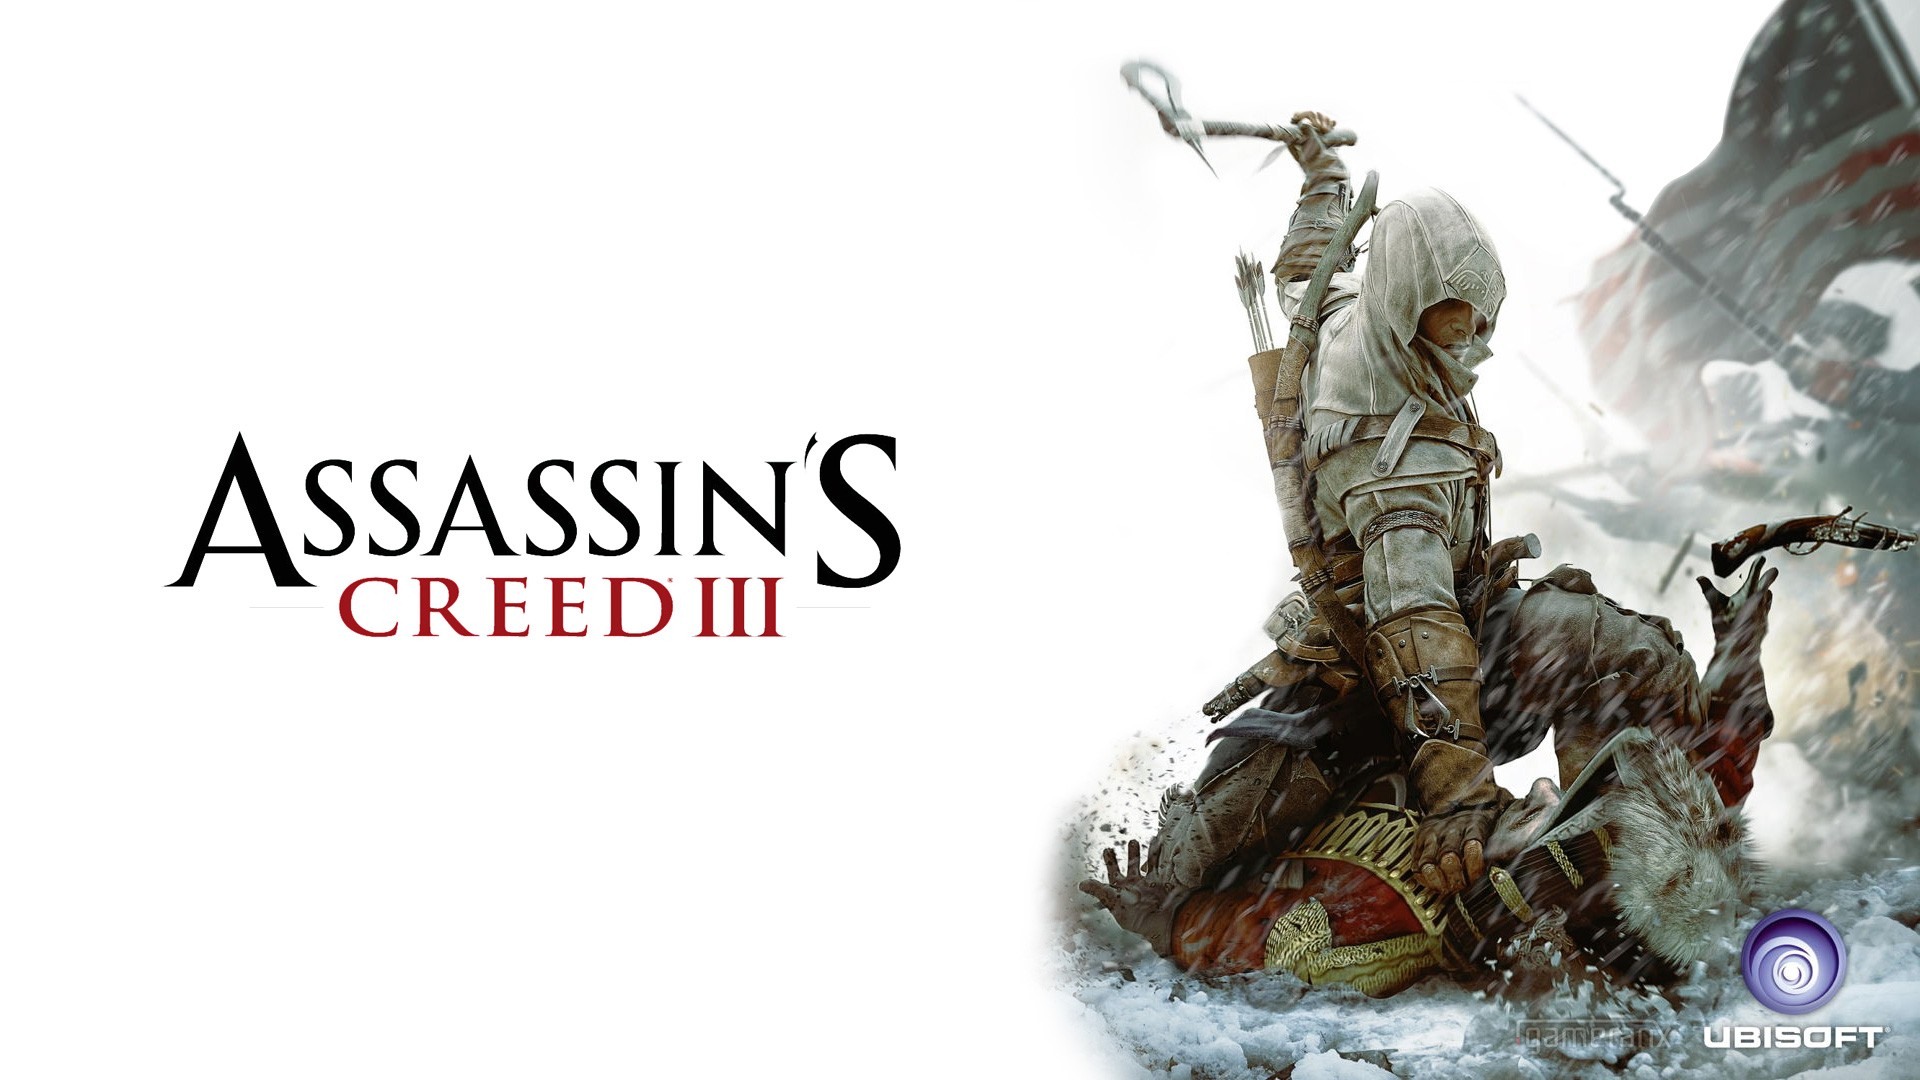 Assassins Creed III HD Wallpaper #13 - 1920x1080